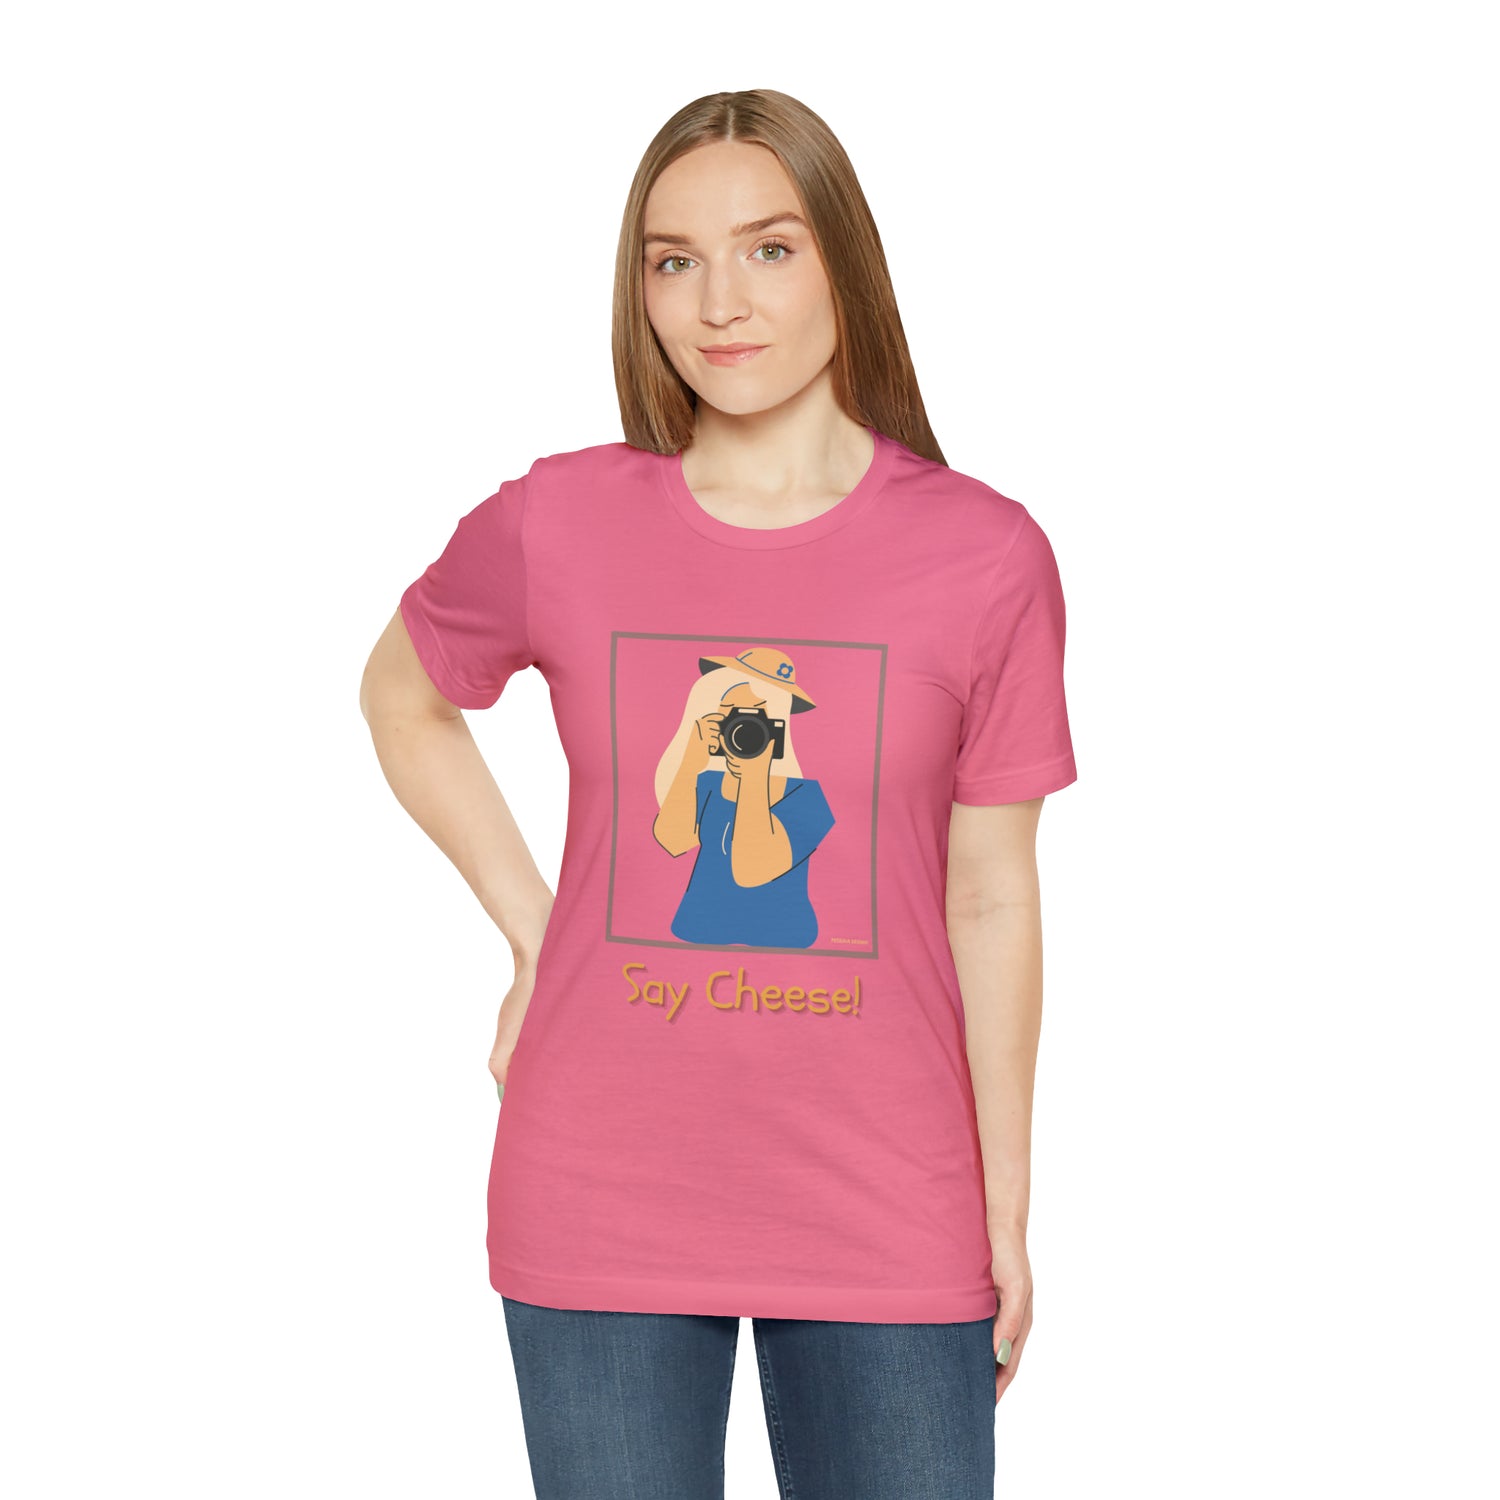 T-Shirt Tshirt Design Gift for Friend and Family Short Sleeved Shirt Petrova Designs